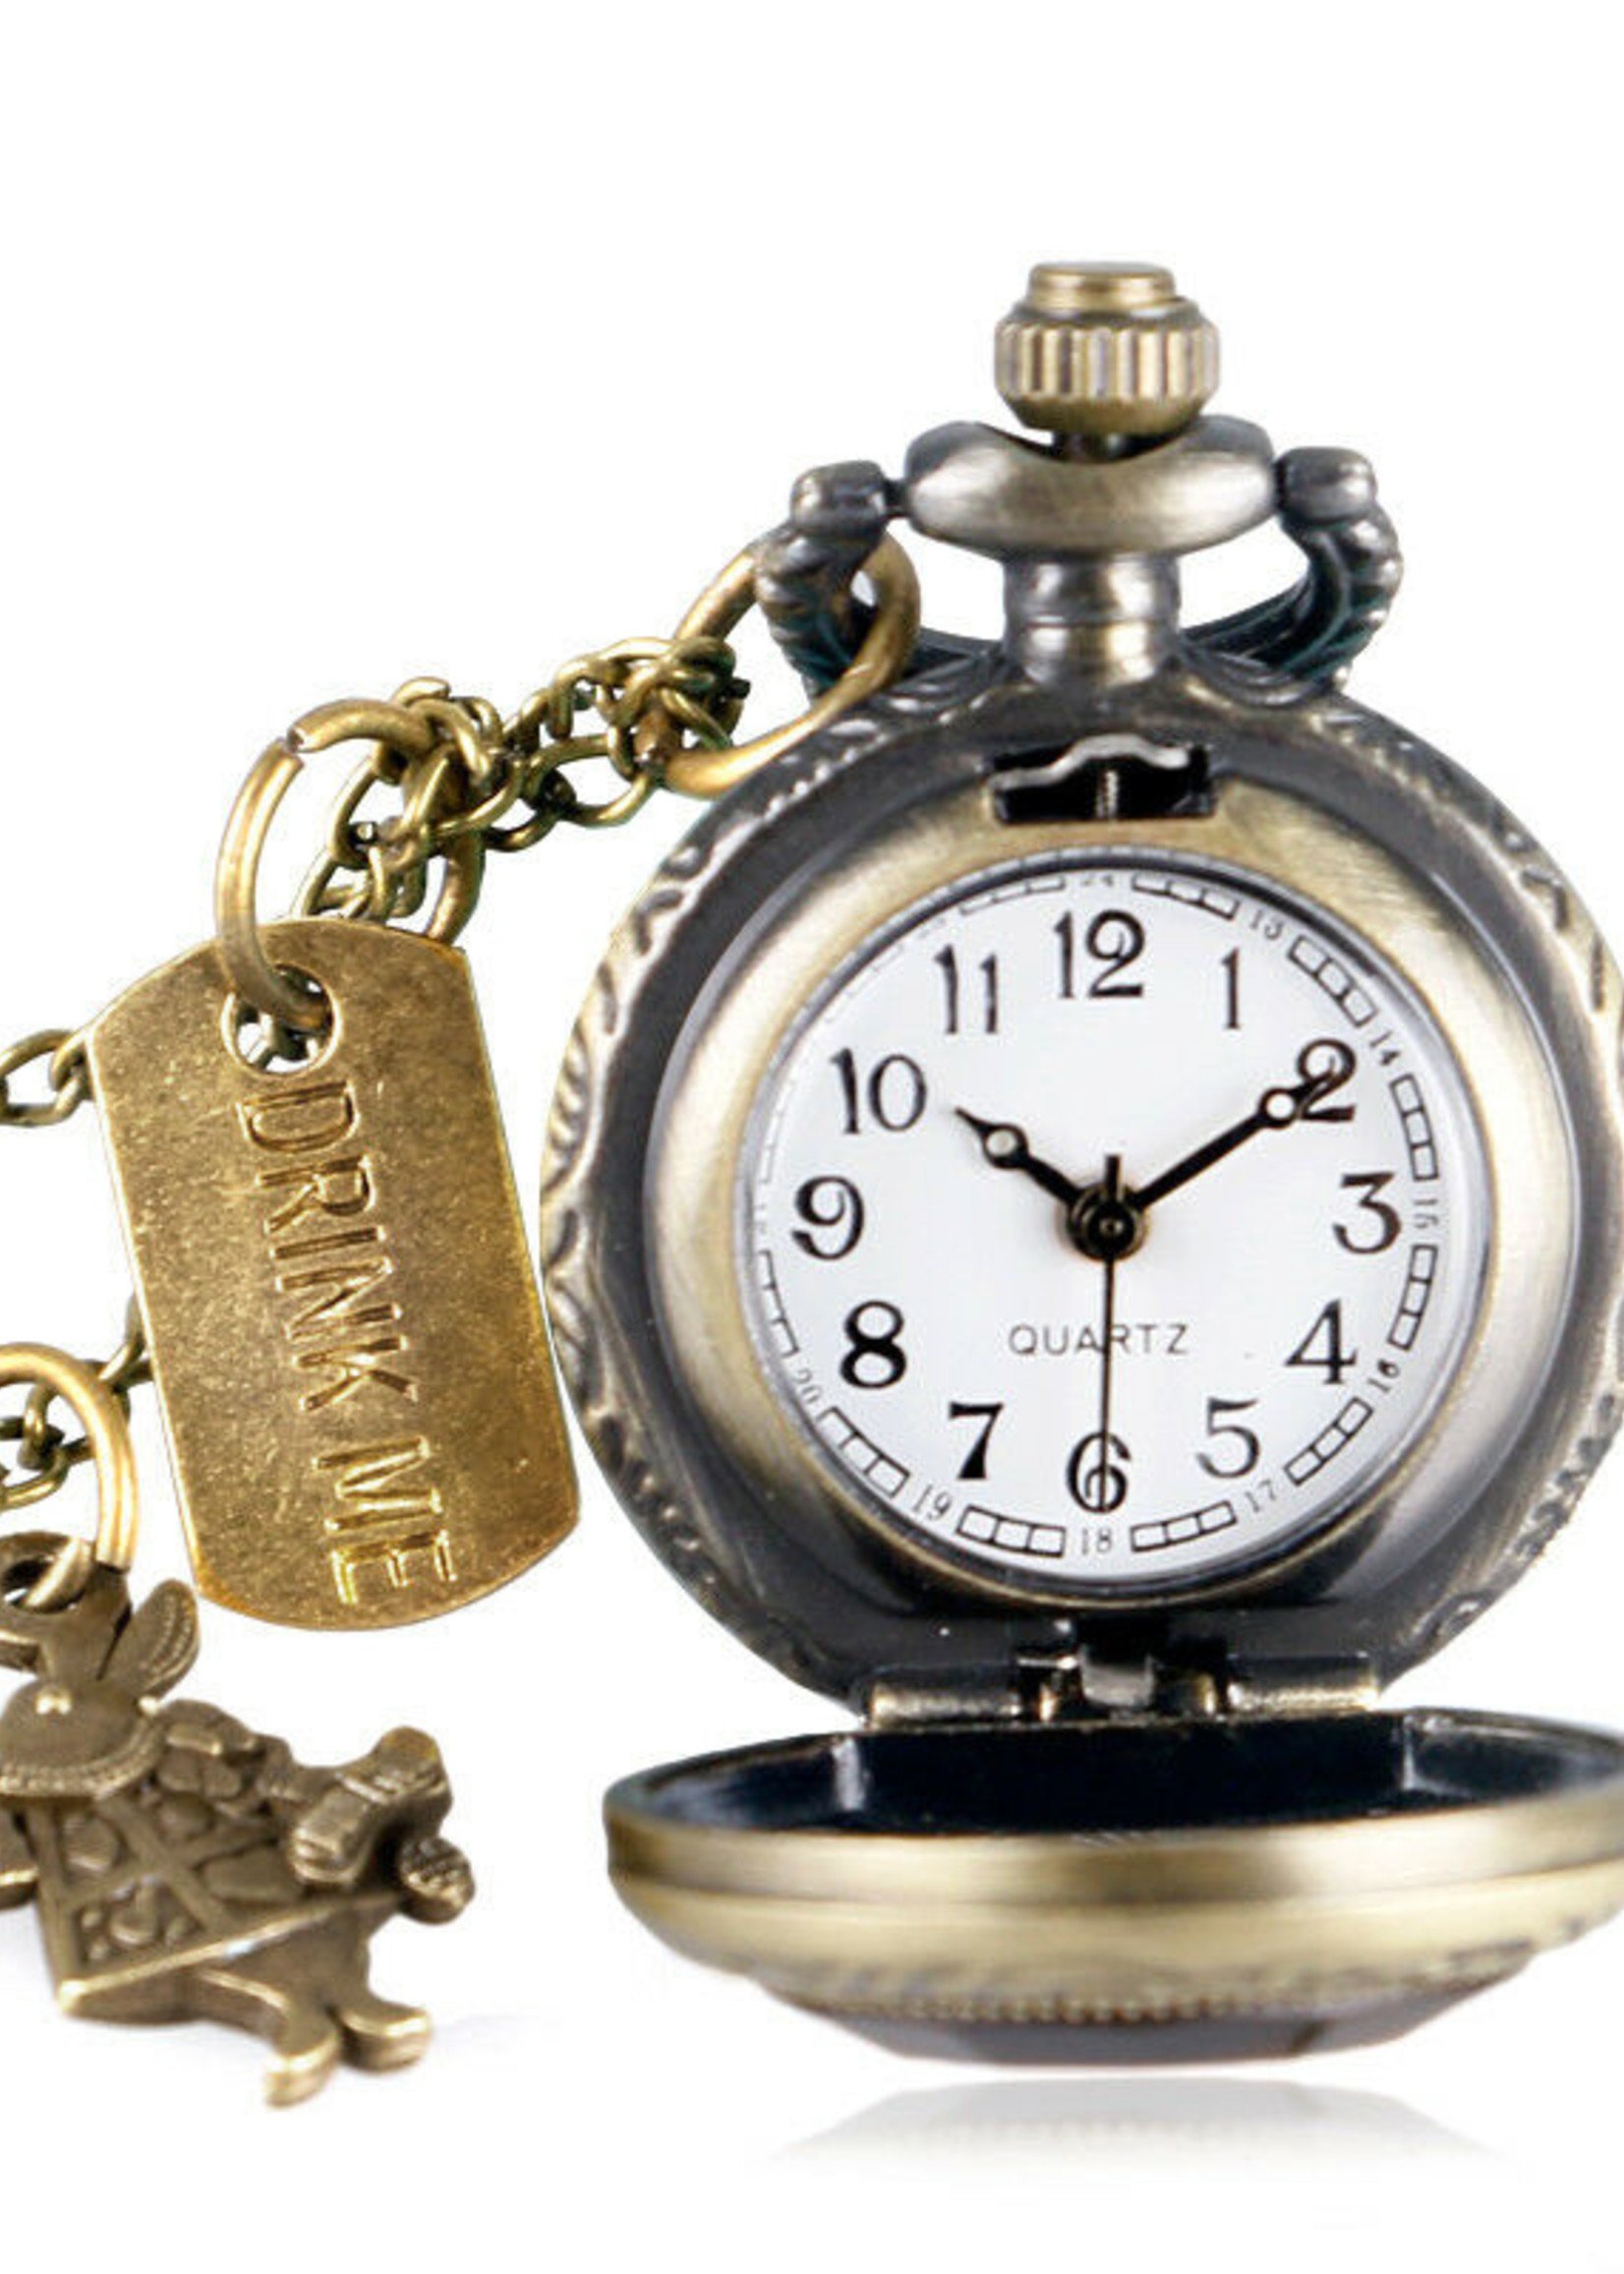 Alice In Wonderland Drink Me Antique Bronze Pocket Watch Necklace